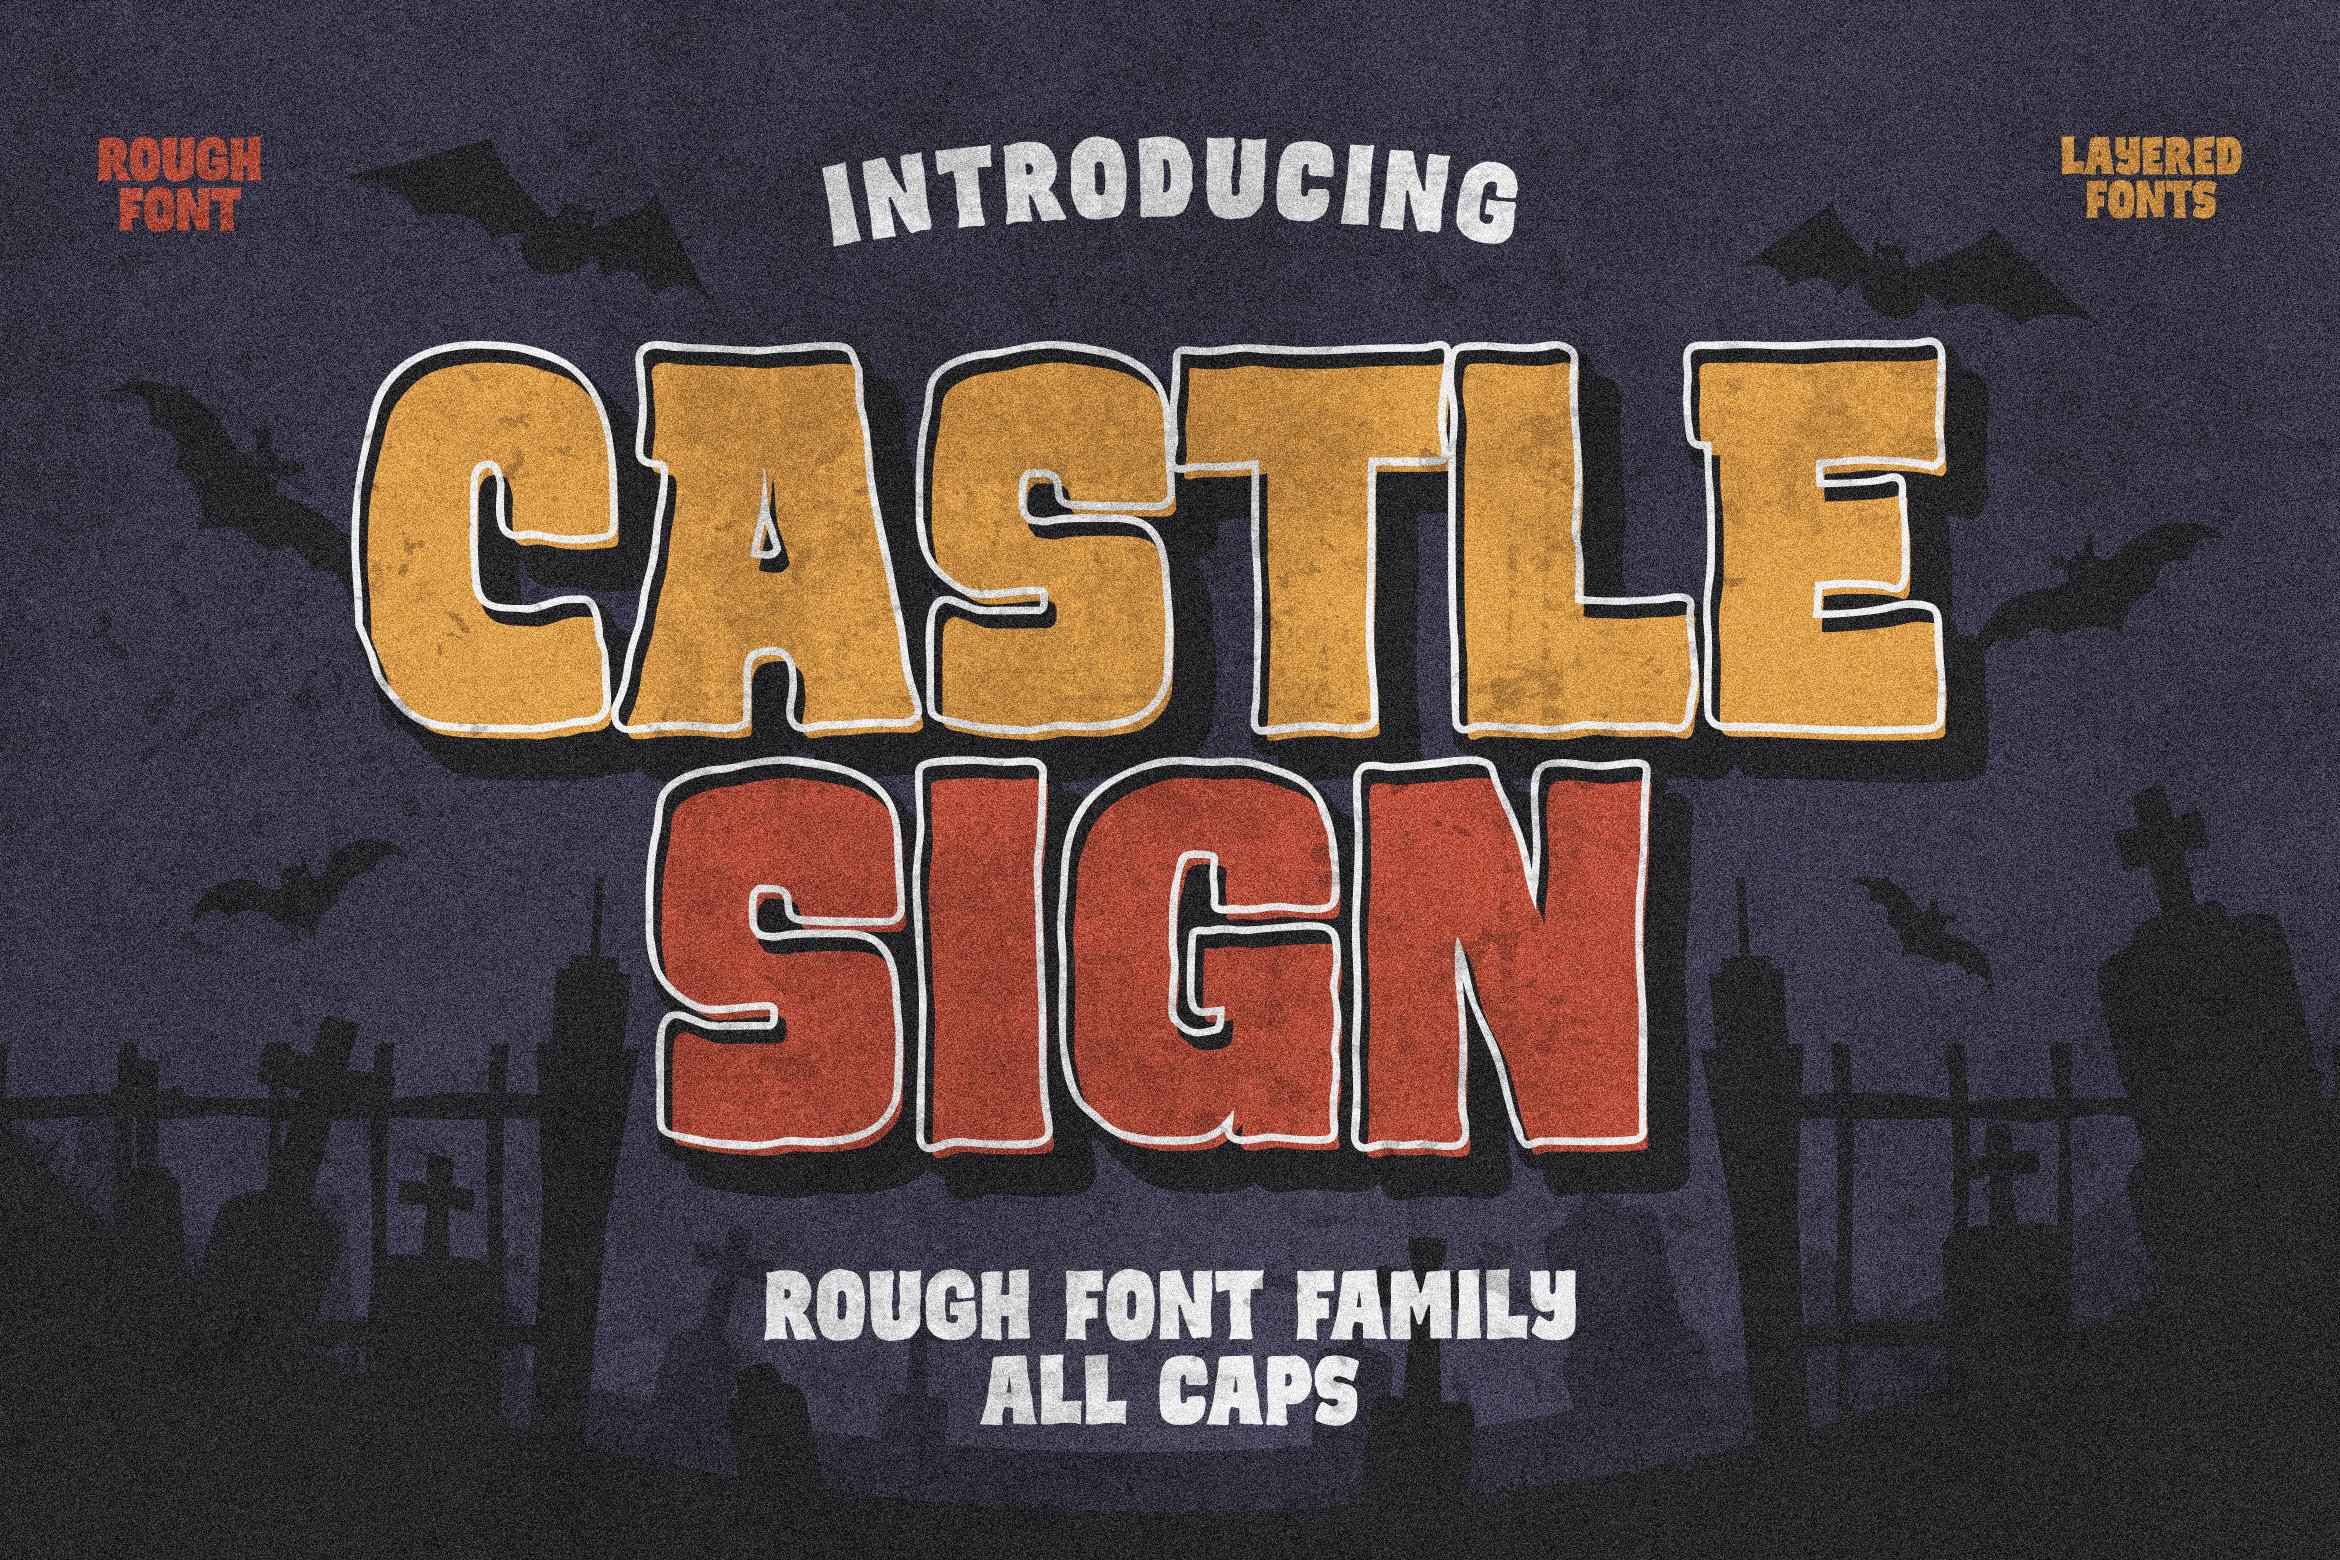 Castlesign Rough Font cover image.